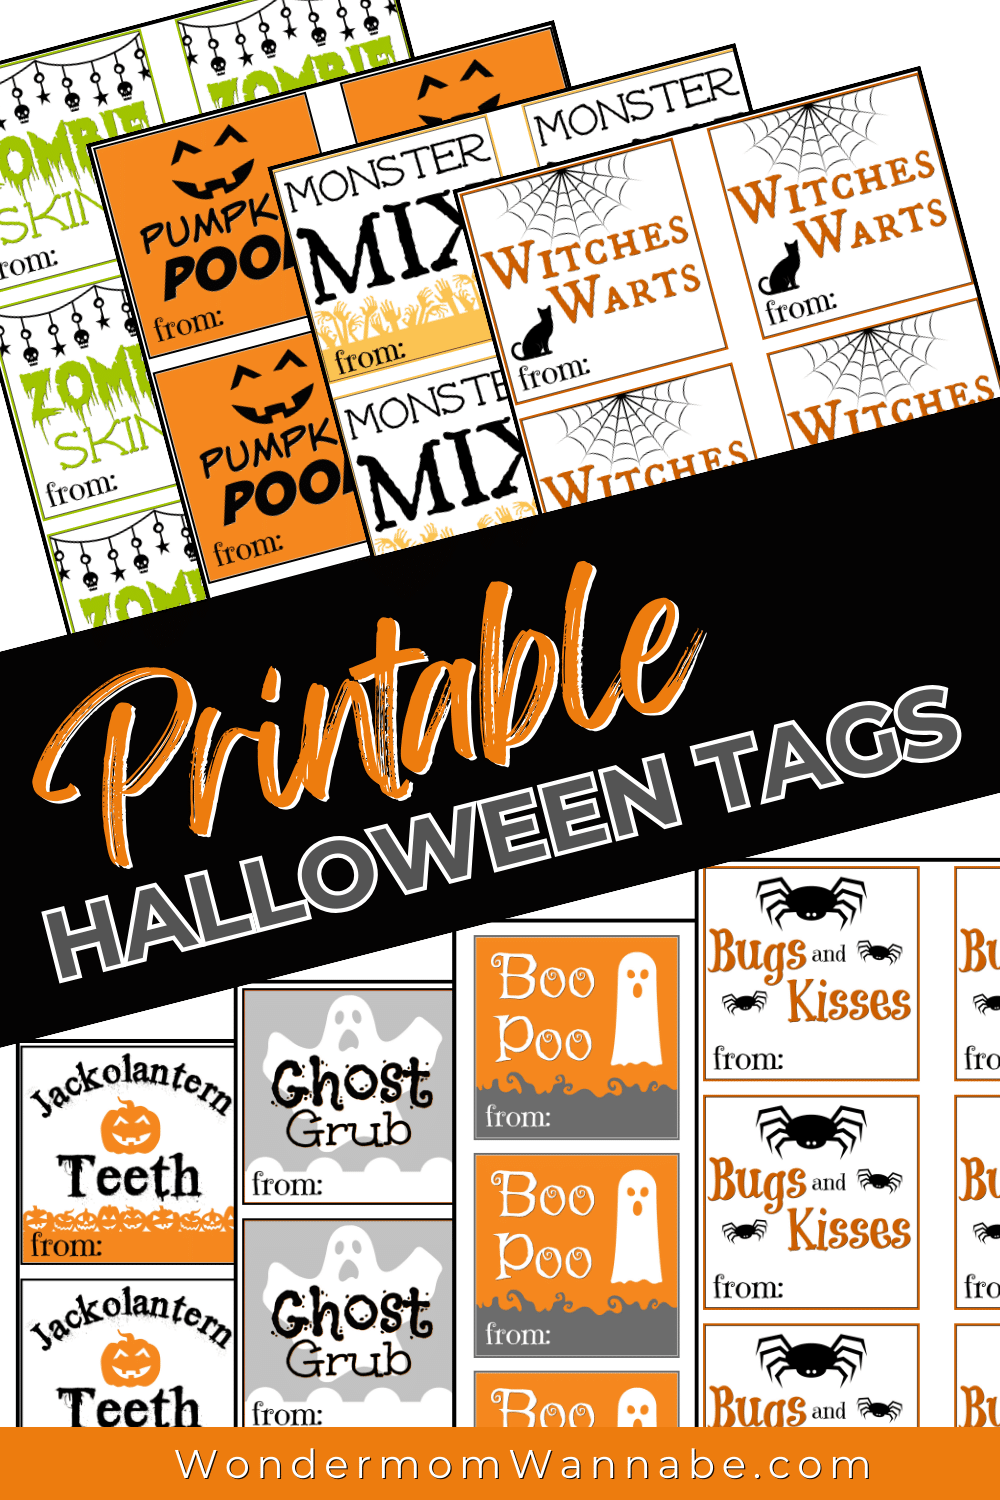 Printable Halloween tags for goodie bags.